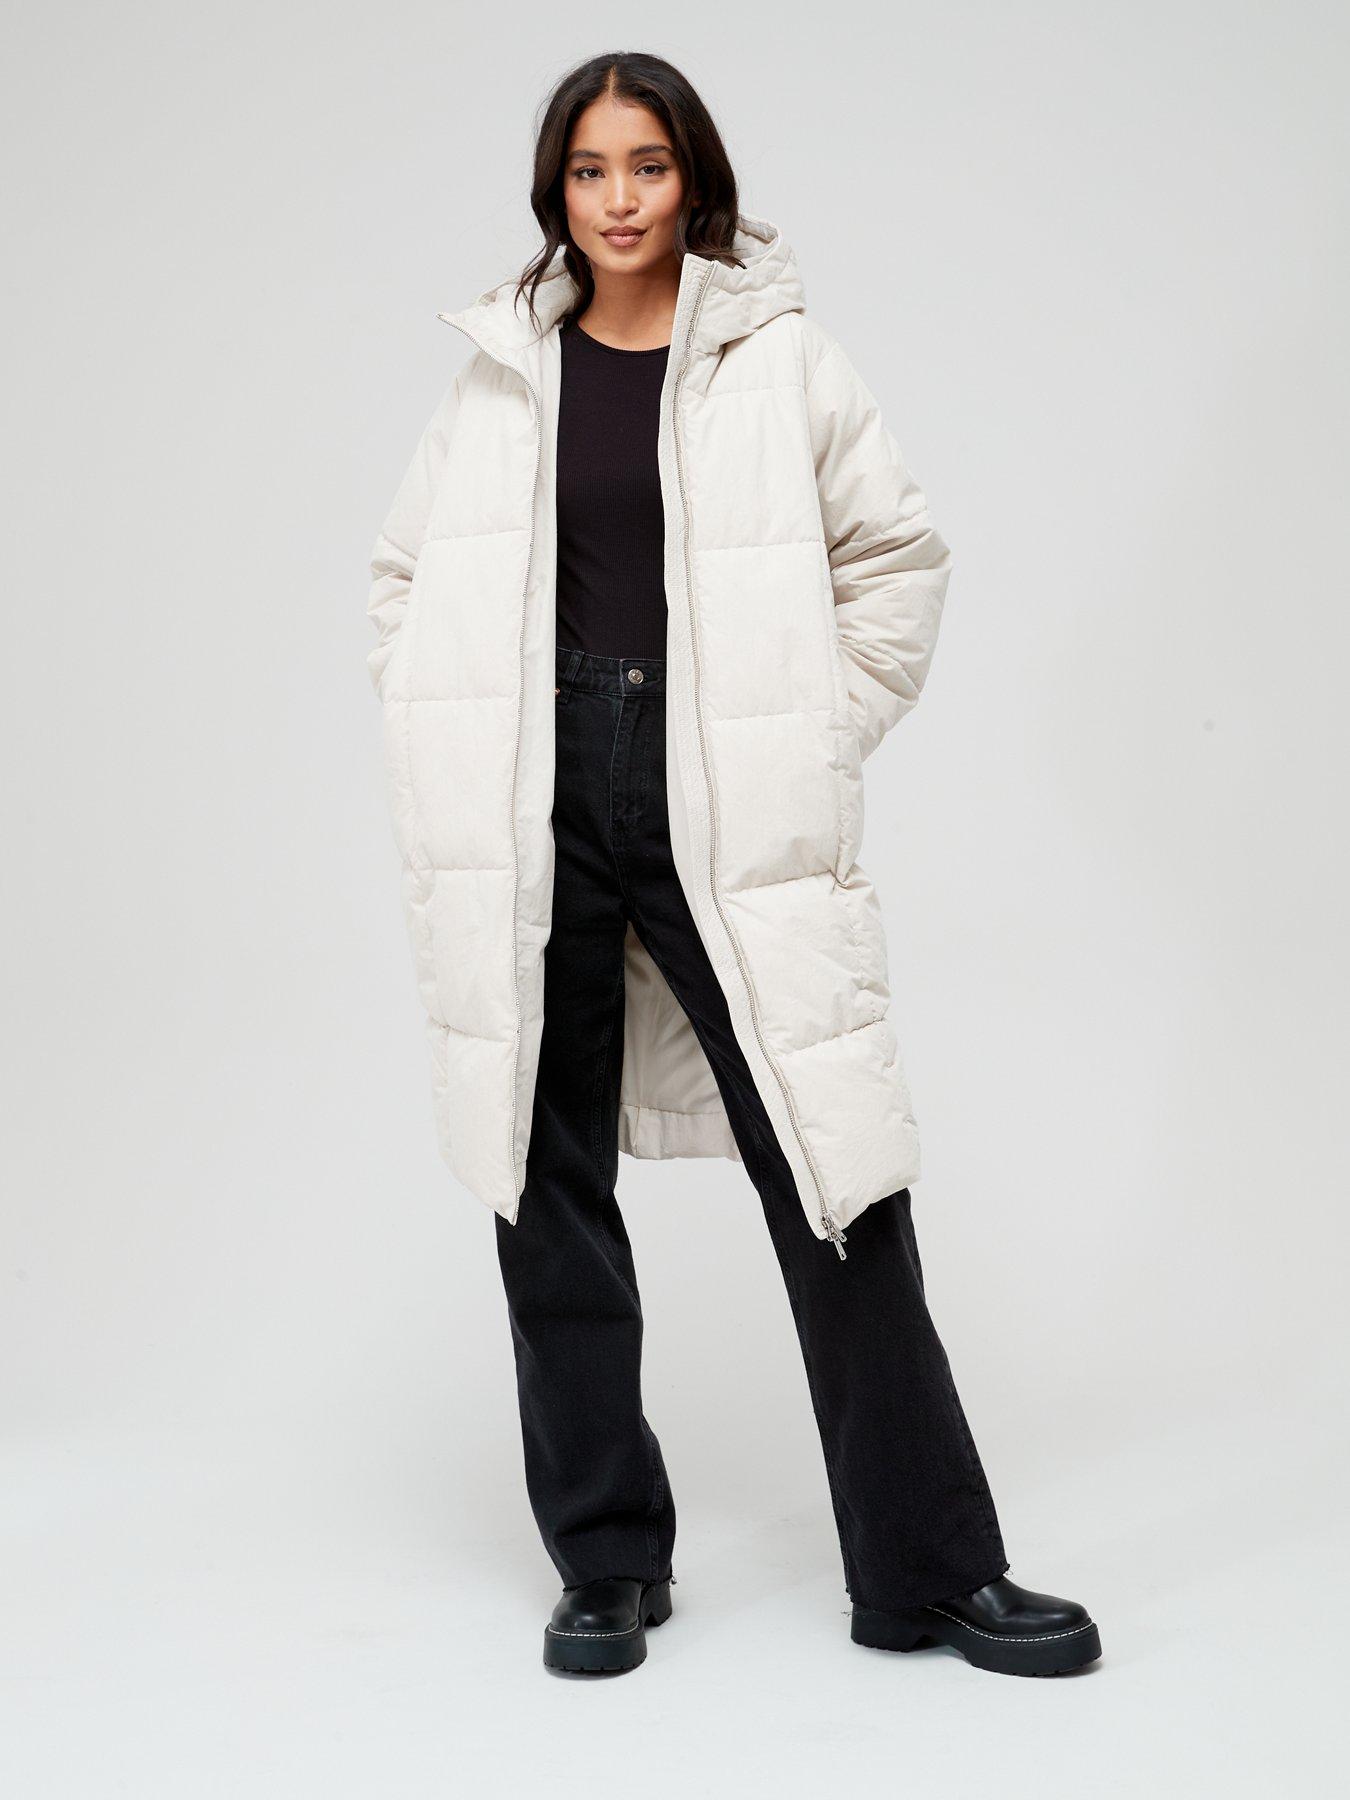 discount 63% Minueto Long coat Multicolored L WOMEN FASHION Coats Print 